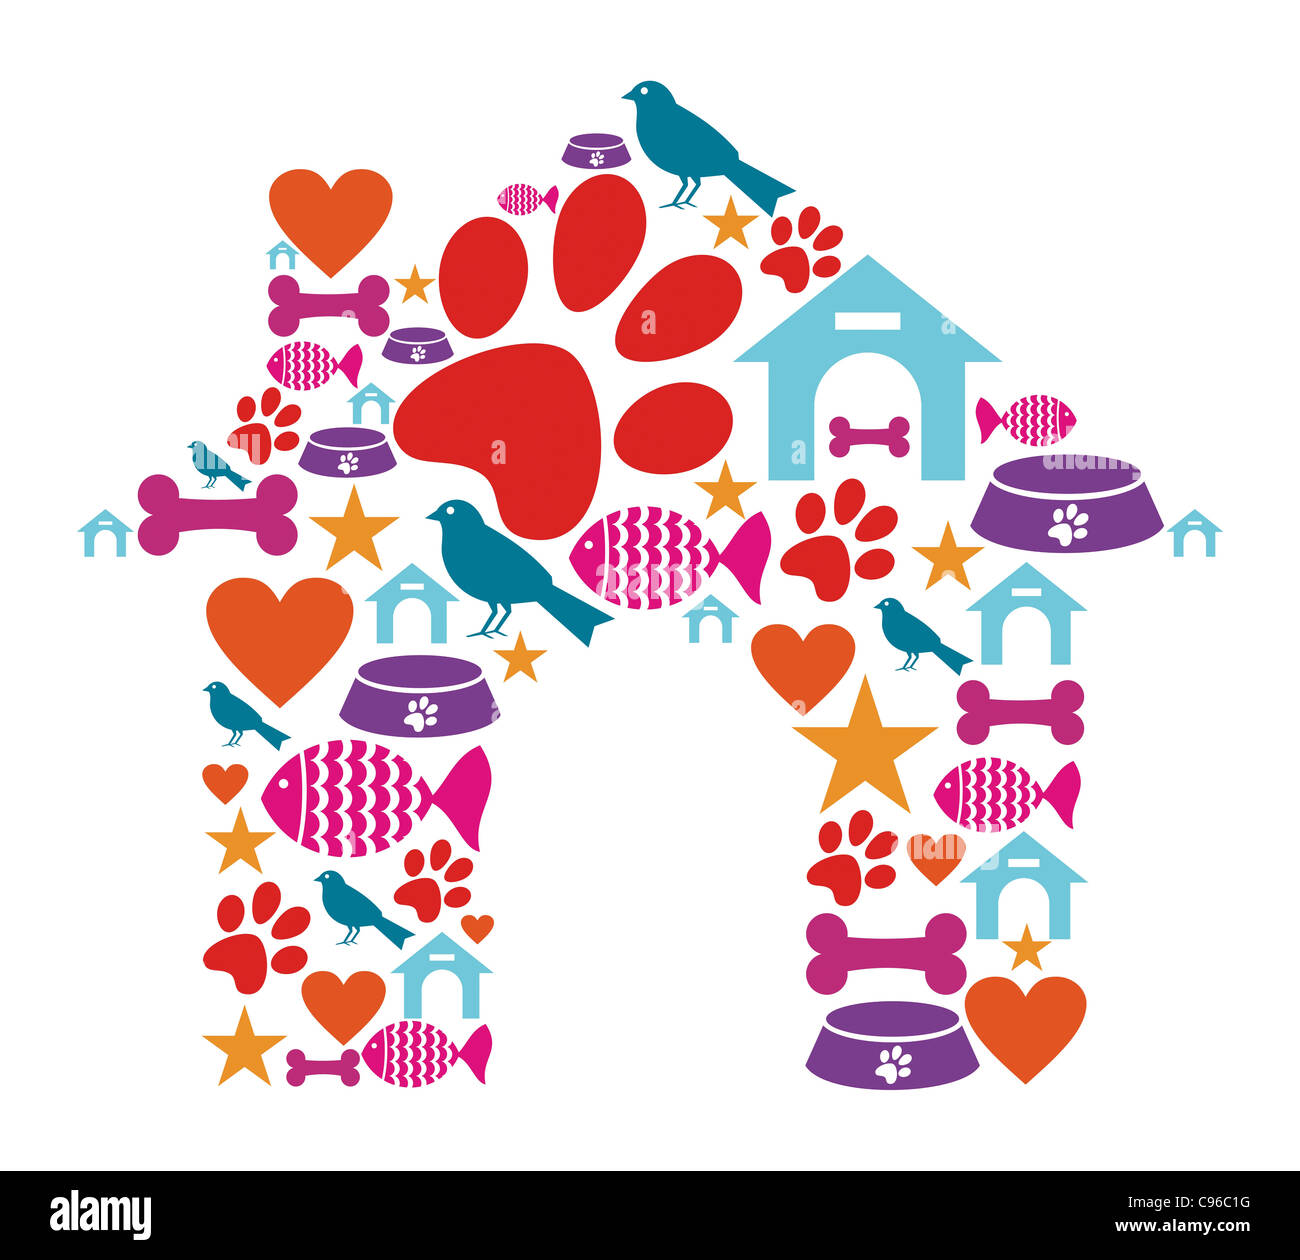 Dog house shape made with animal care icons set. Stock Photo